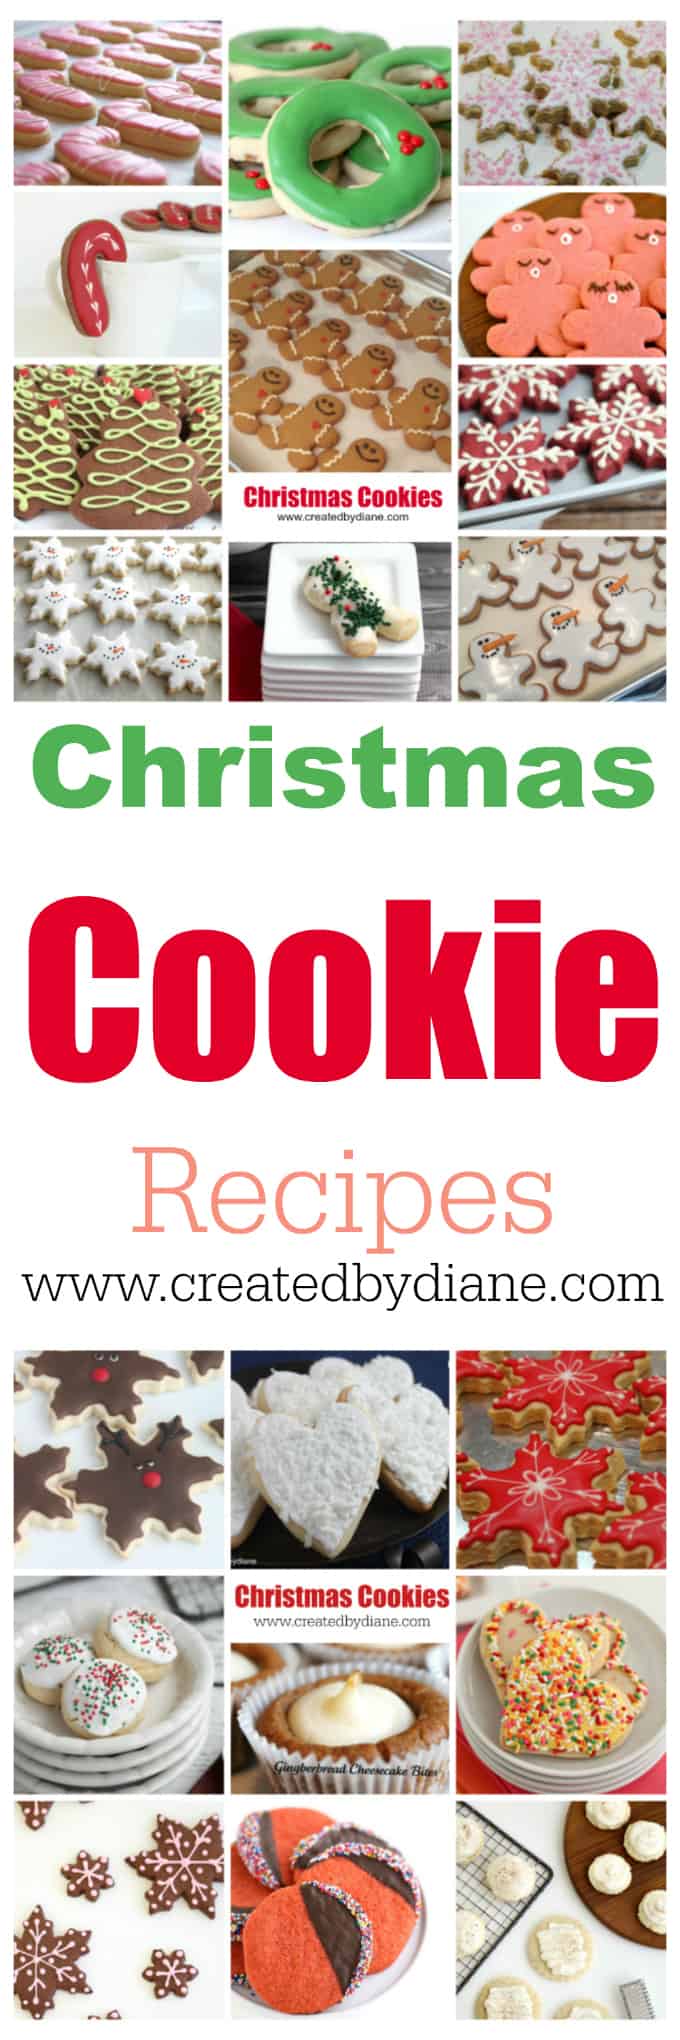 Christmas Cookies www.createdbydiane.com